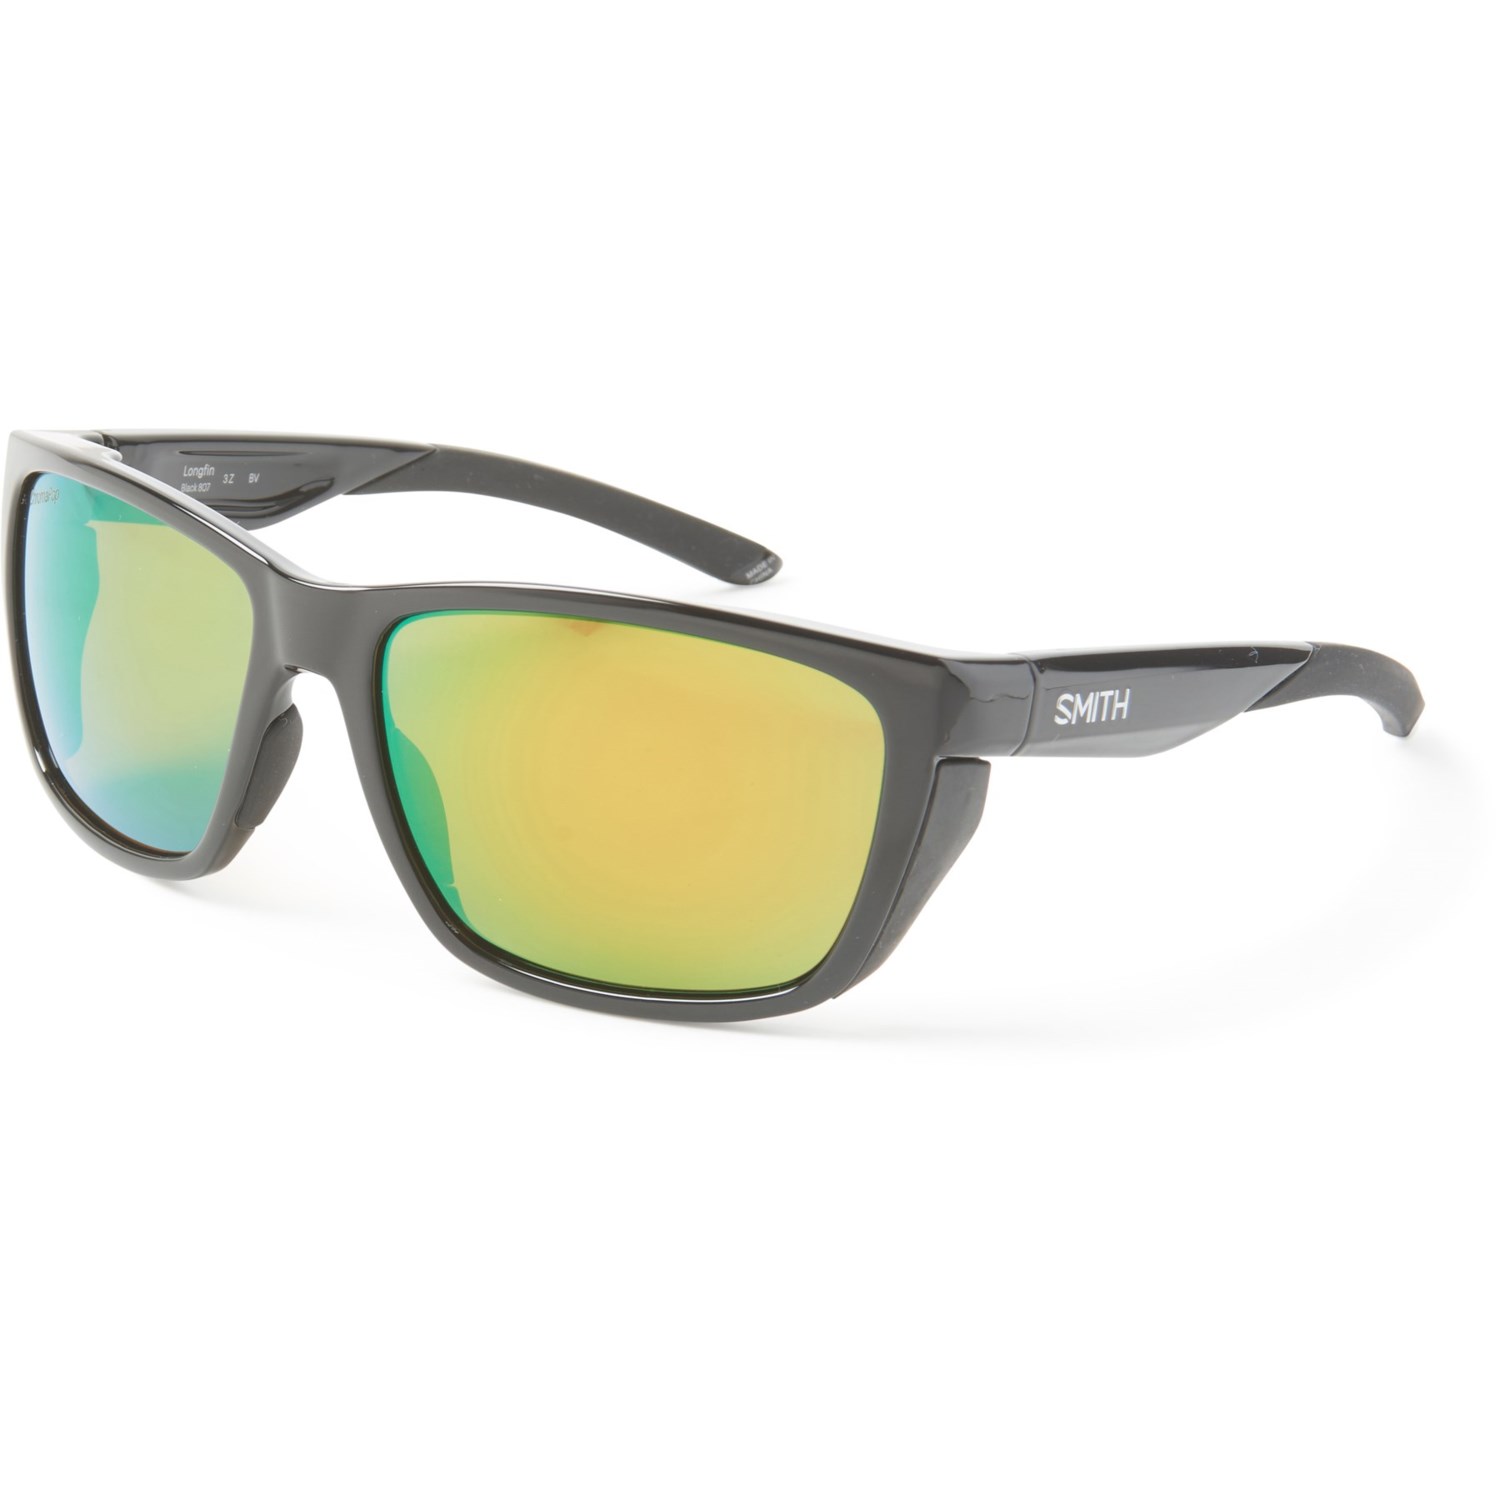 Smith Optics Longfin Sunglasses (For Men) - Save 49%